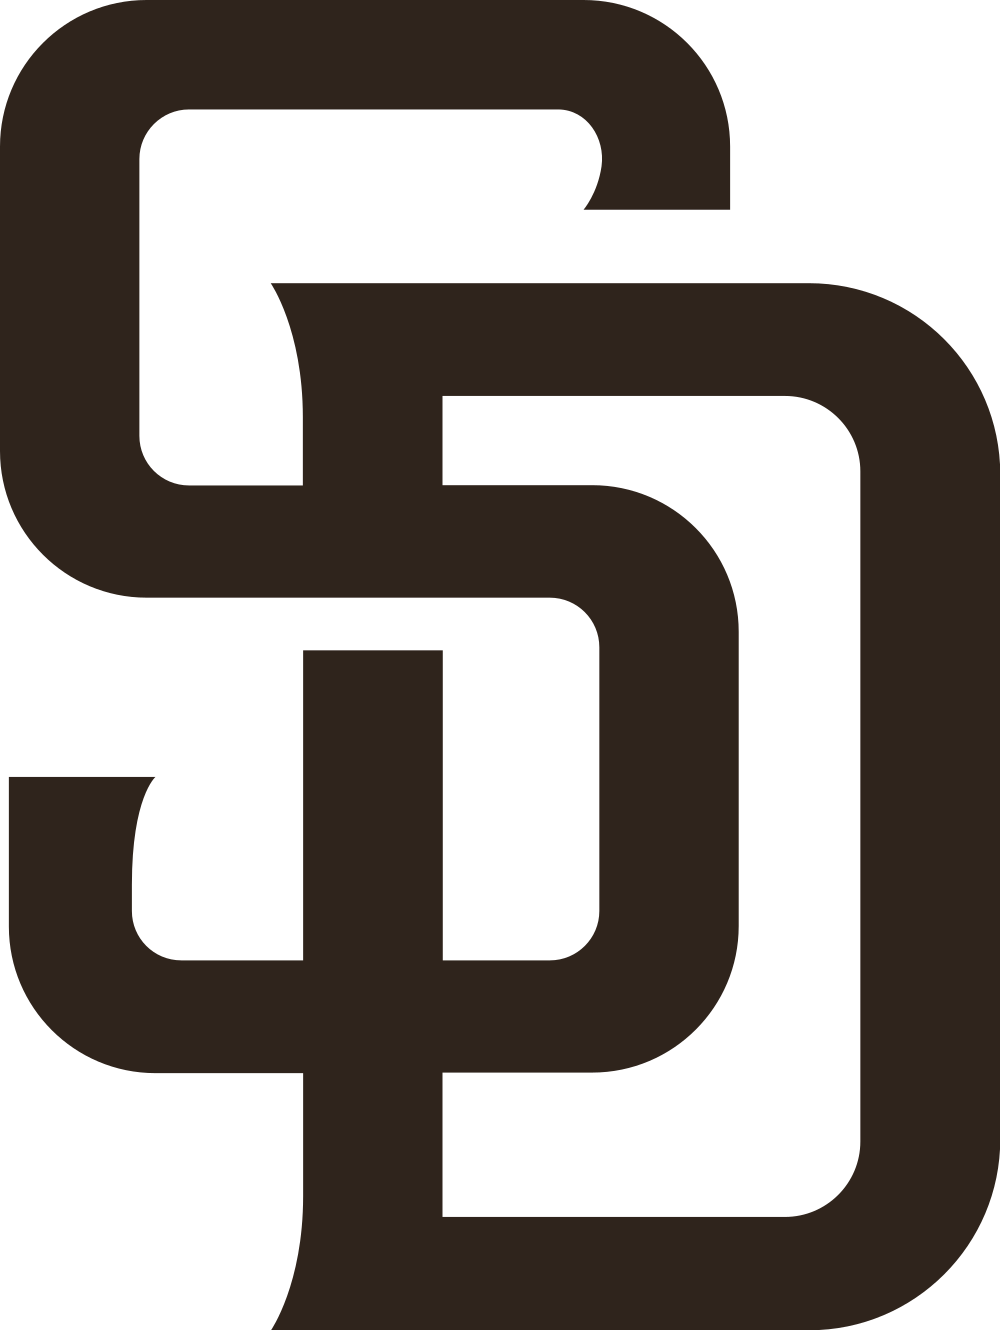 San Diego Padres logo png transparent